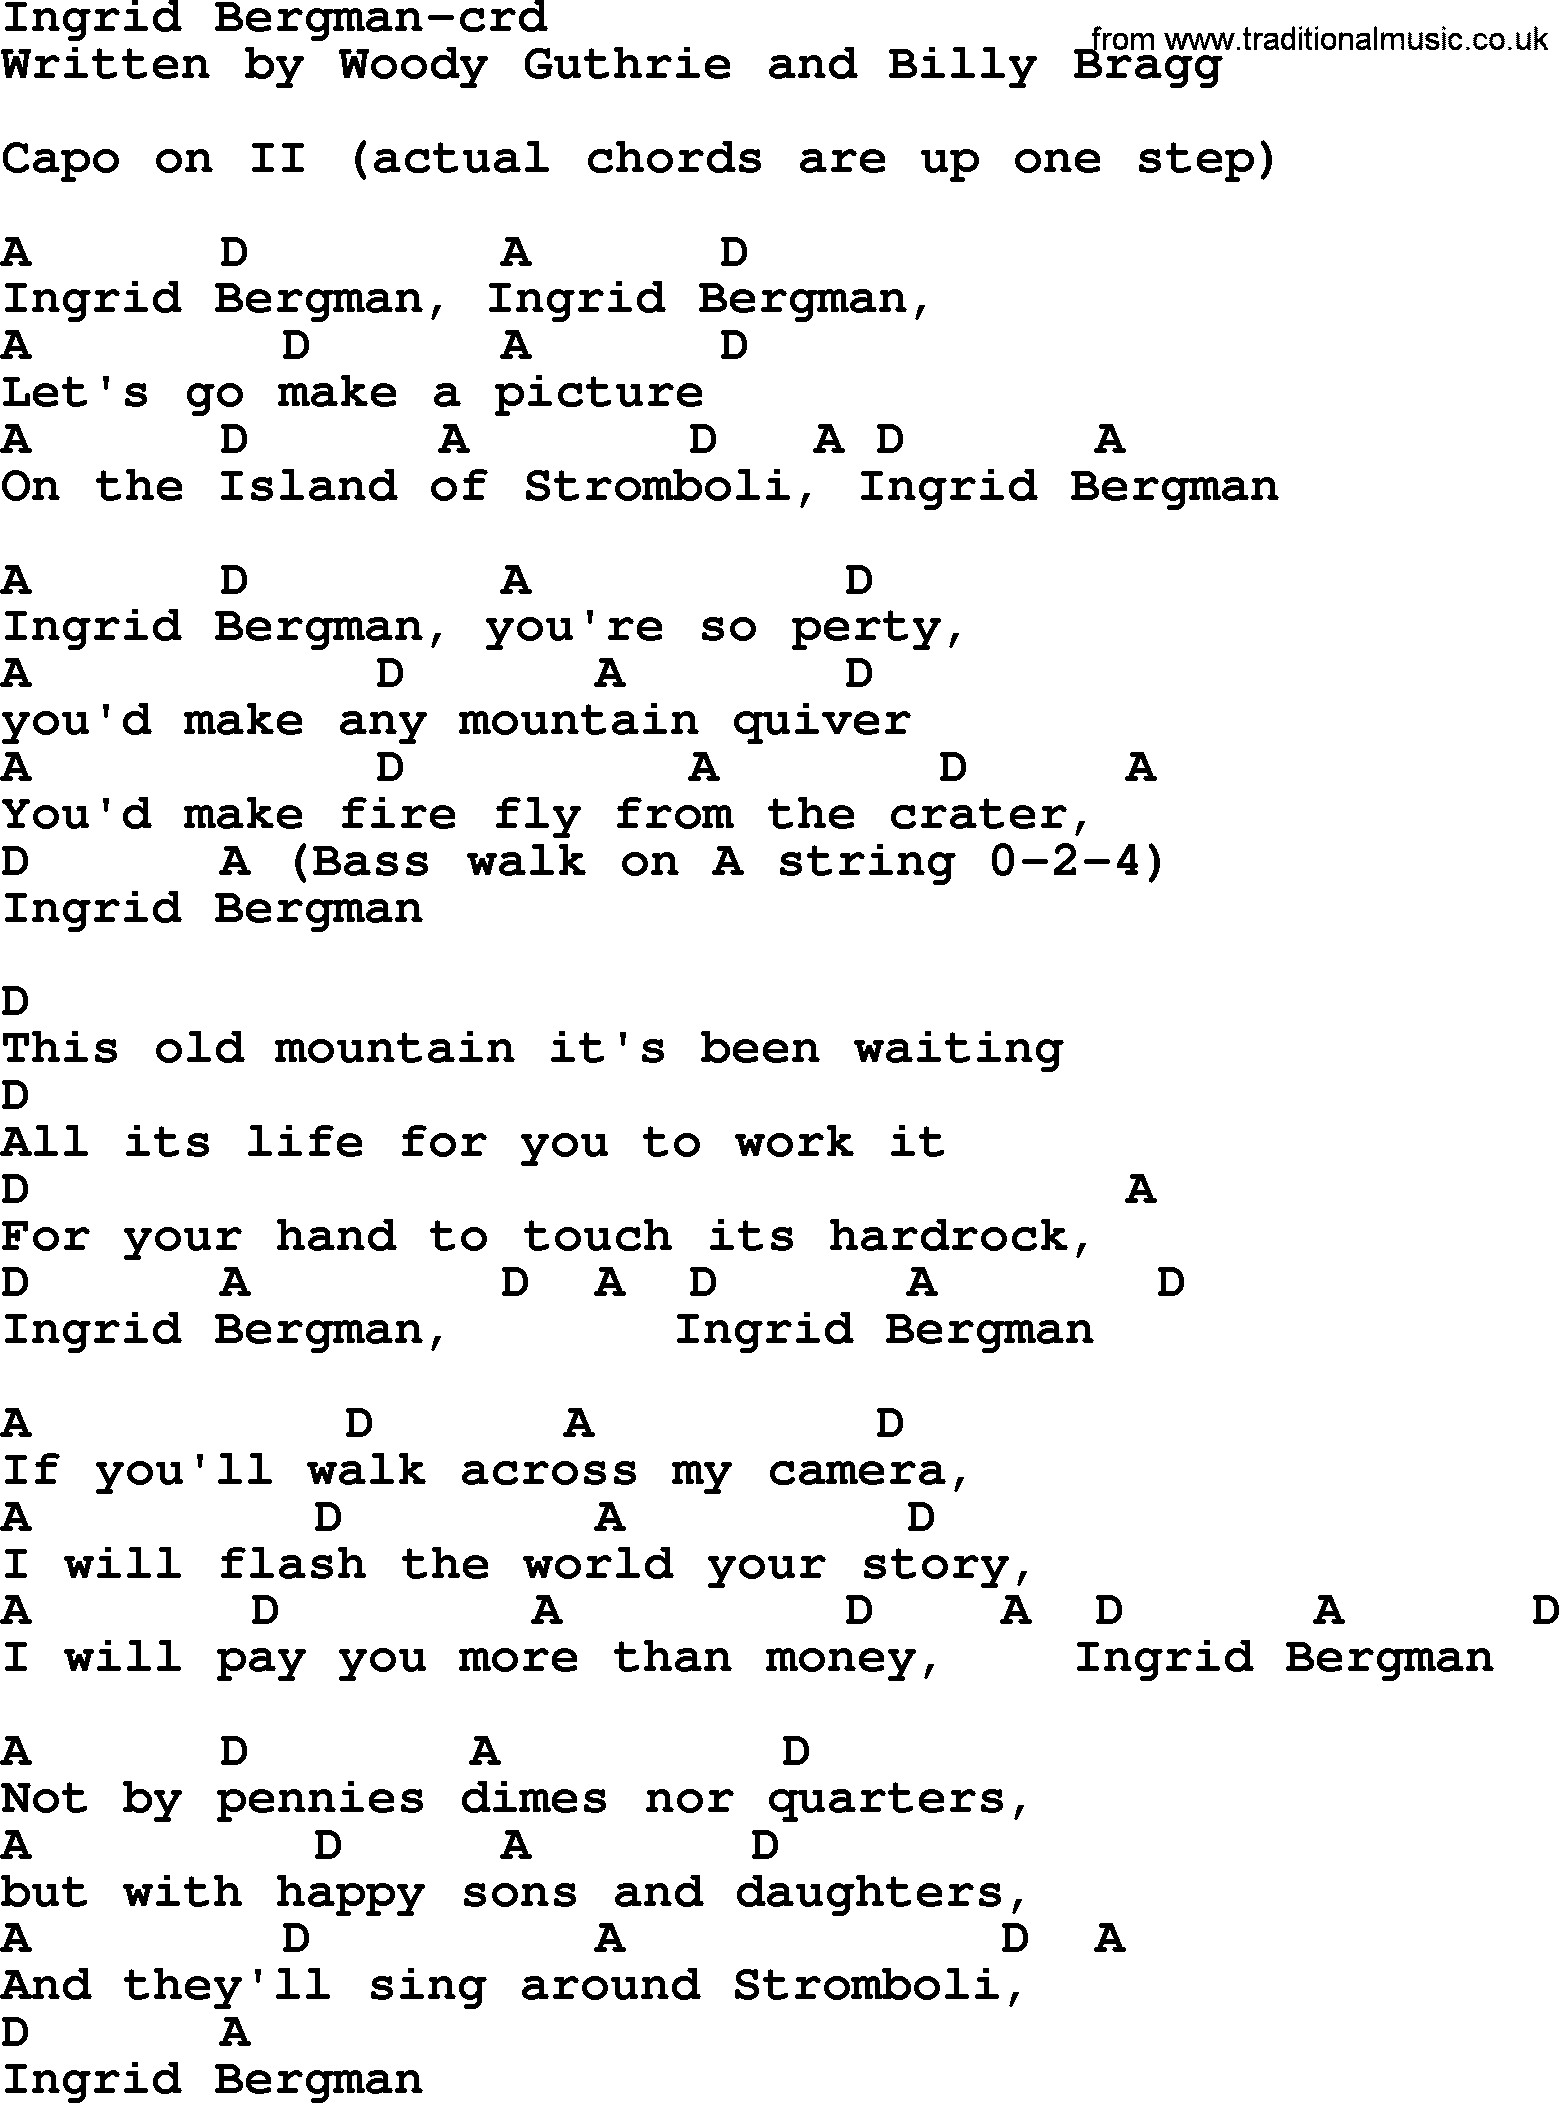 Woody Guthrie song Ingrid Bergman lyrics and chords